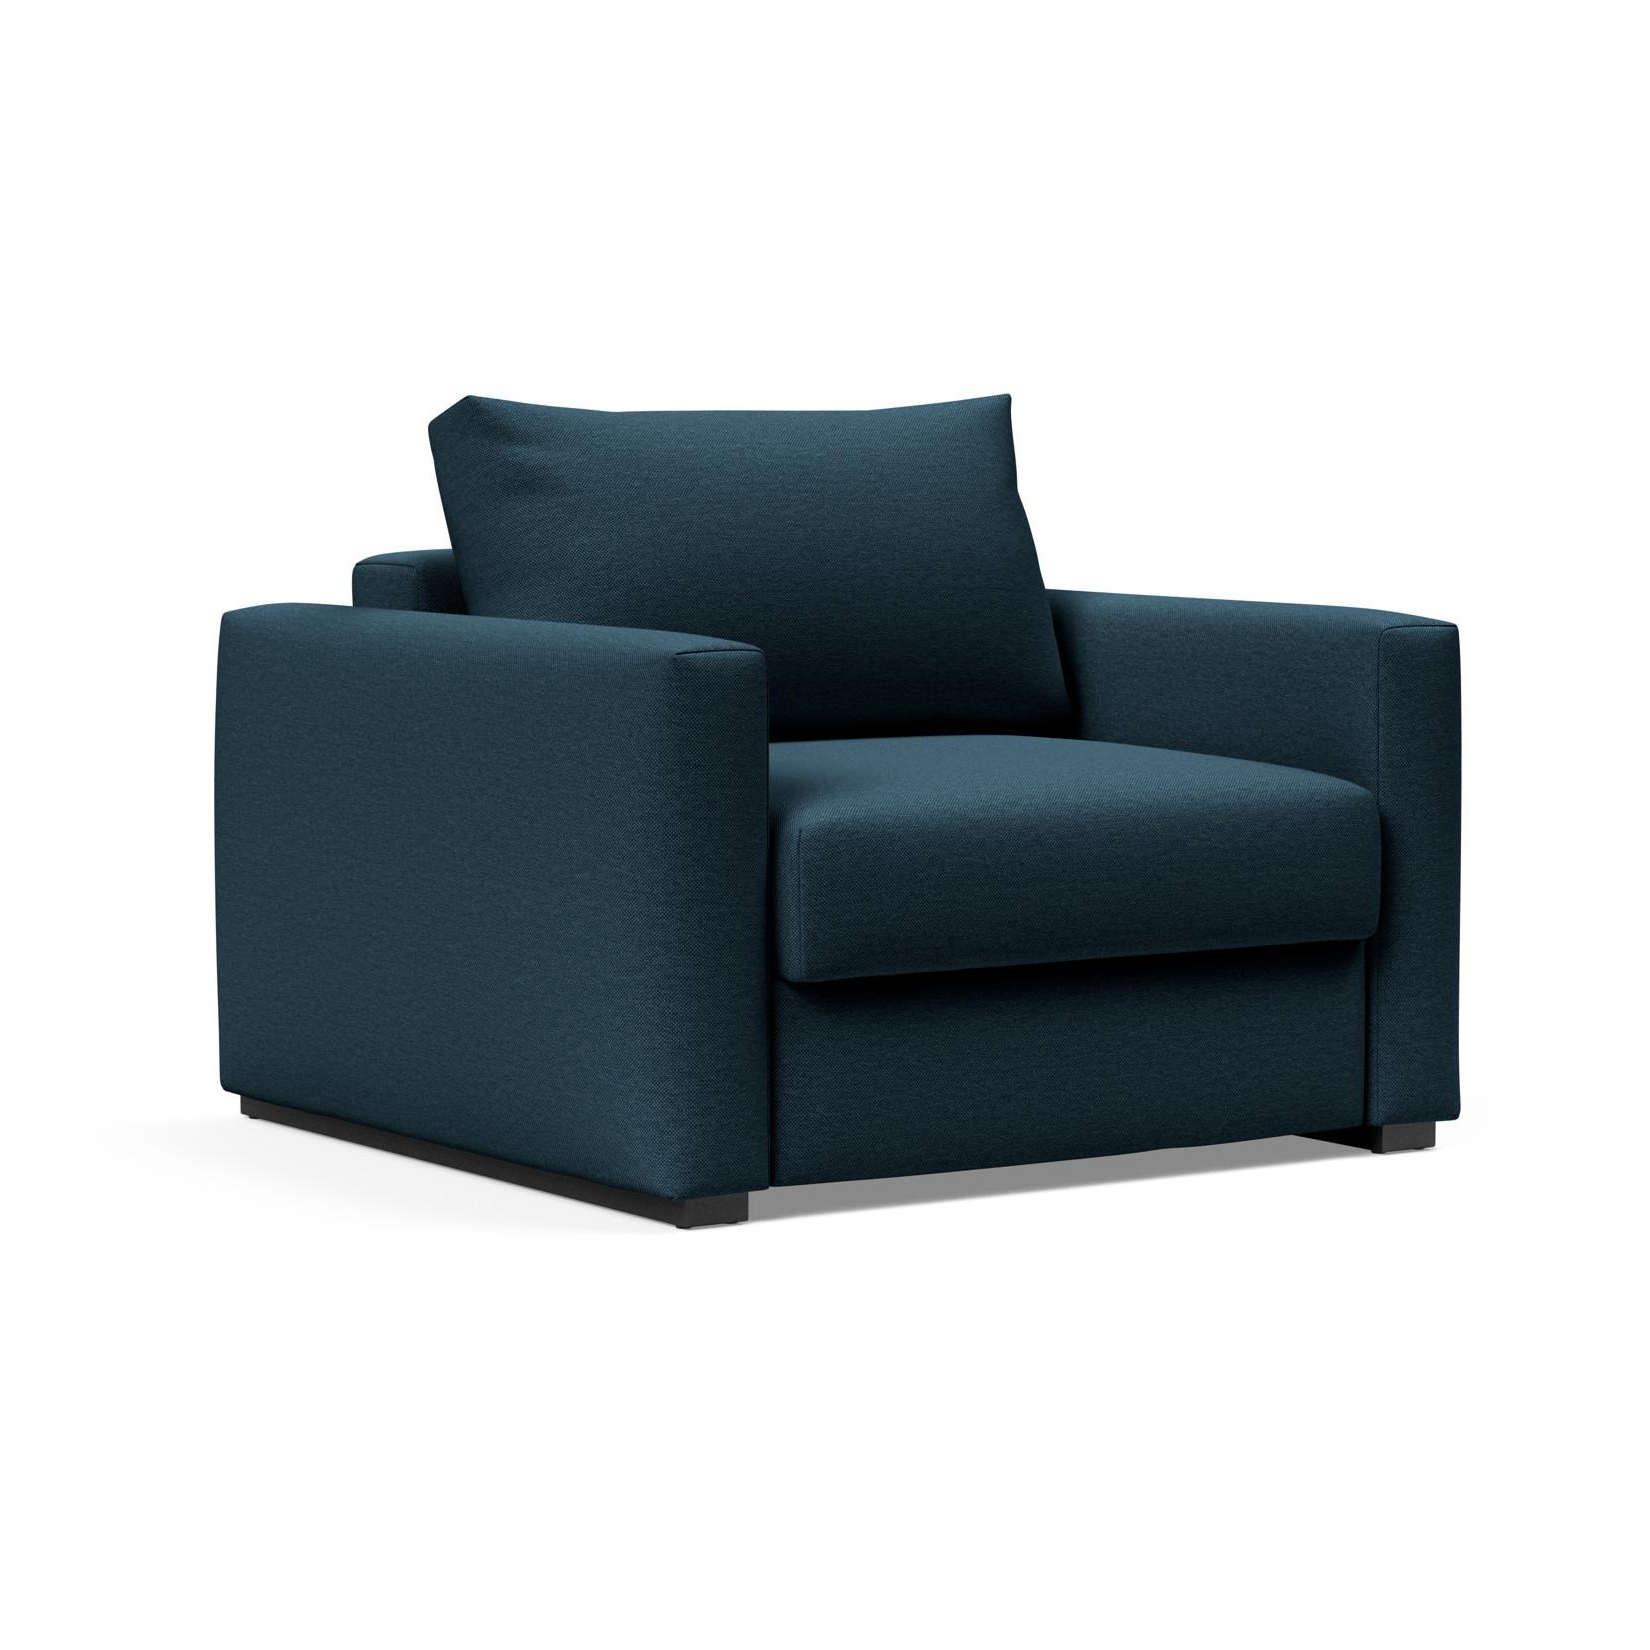 Innovation - Cosial 80 slaapfauteuil - marineblauw/stof 580 Argus Navy Blue (100% gerecycled polyester)/bxhxd 119x85x110cm/onderstel staal zwart gelak